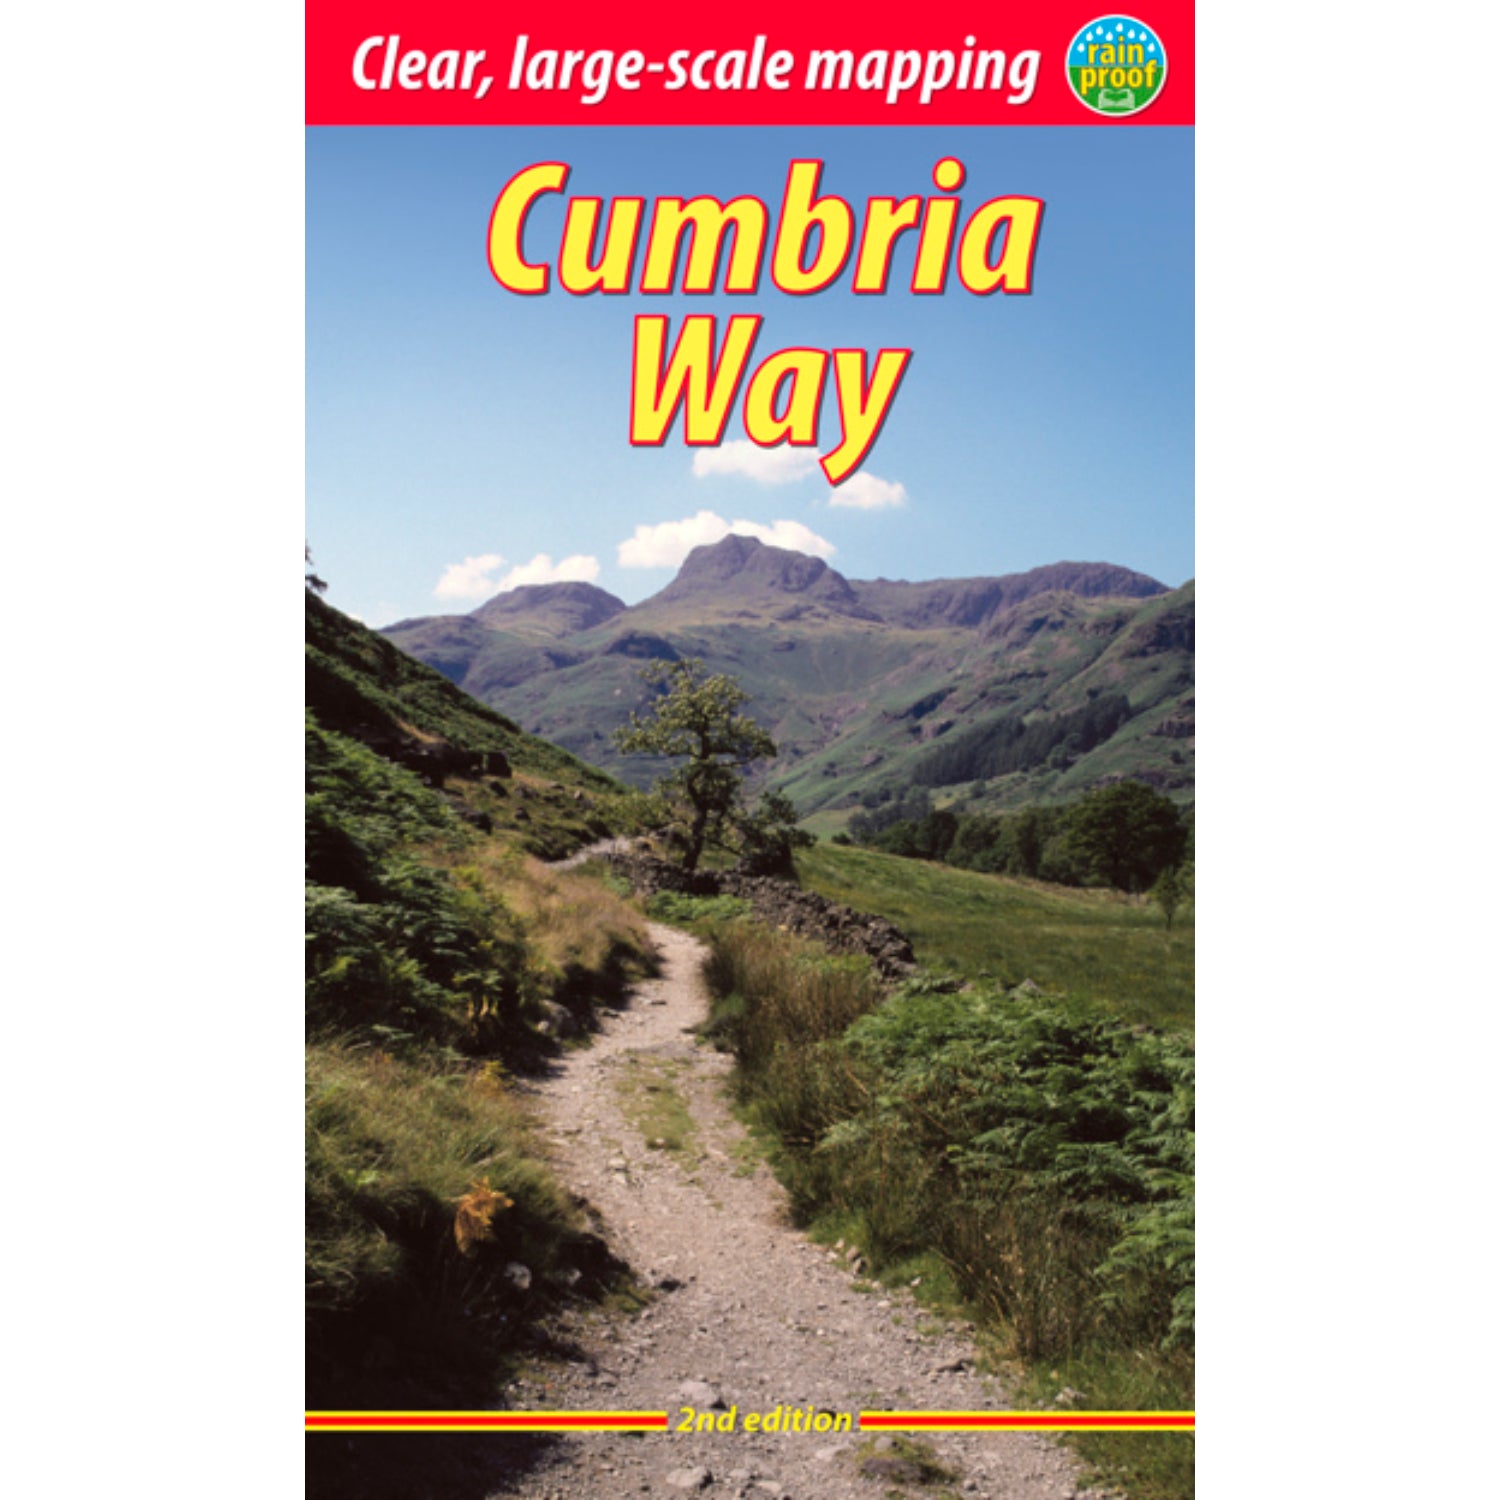 Cumbria Way Rucksack Reader, Guide Book